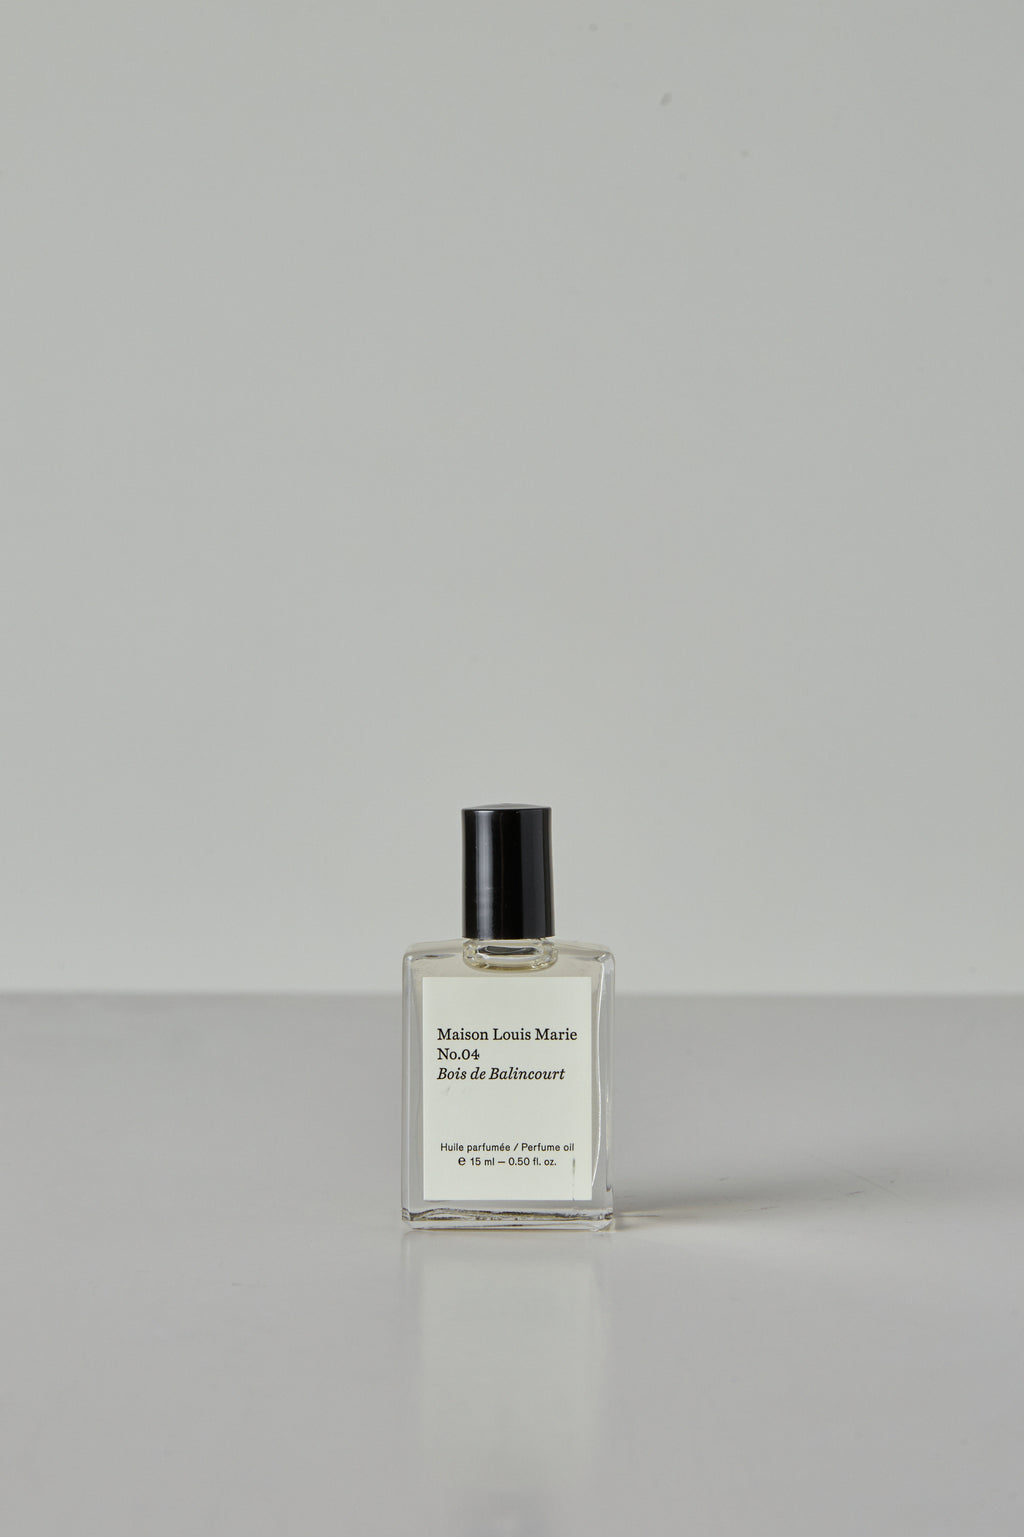 No.04 Bois de Balincourt Perfume Oil